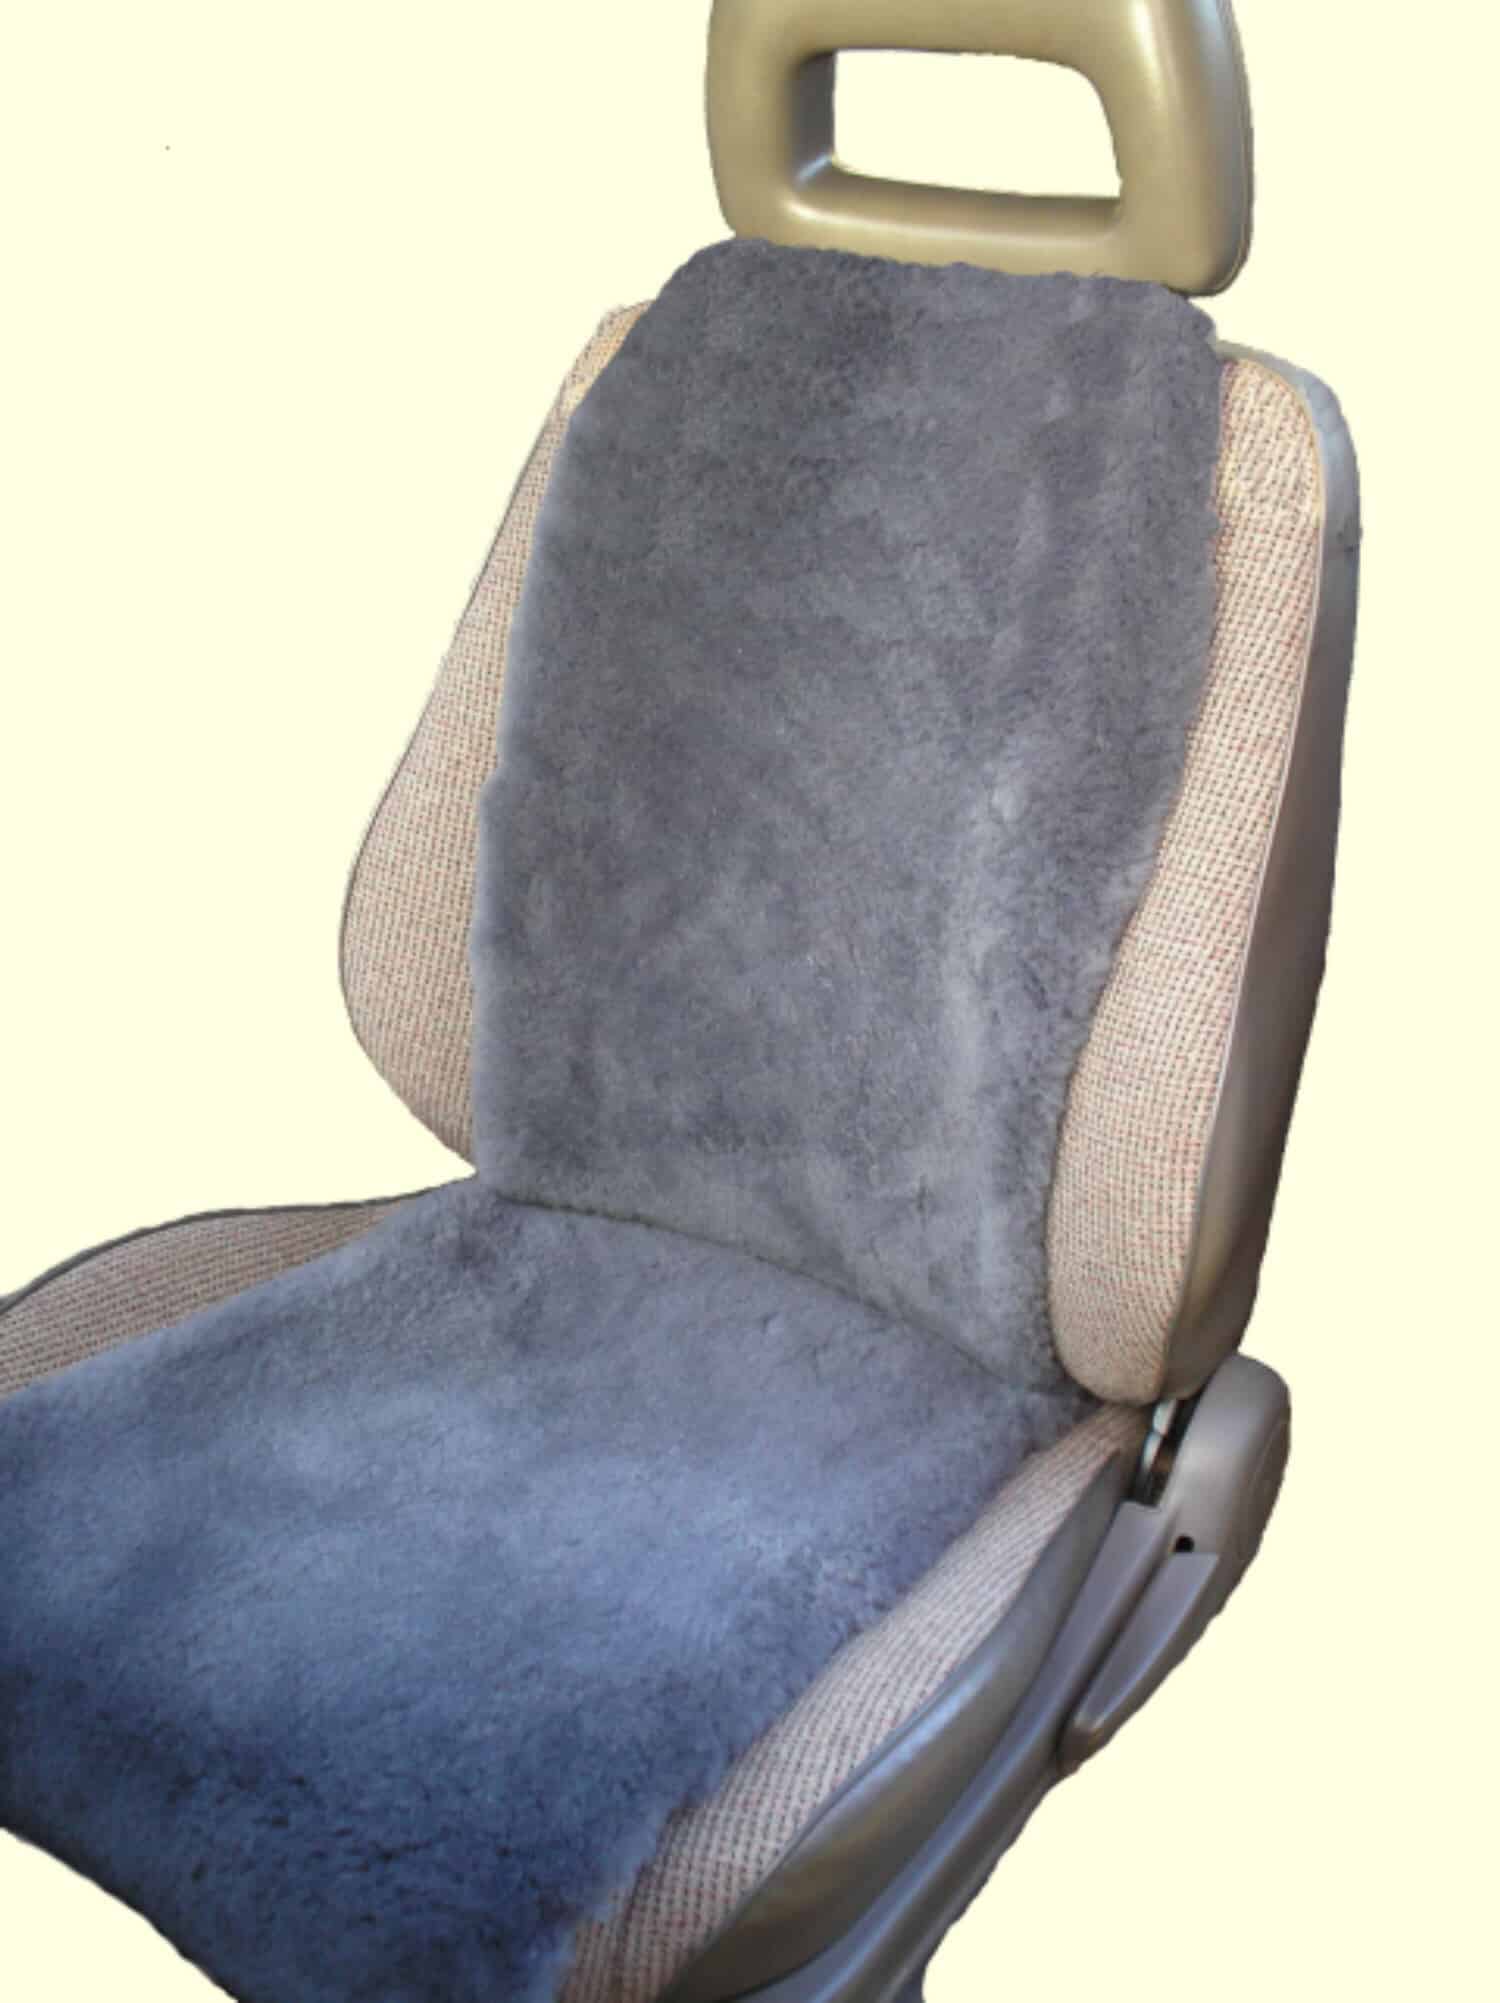 Insert Car Seat Cover Sheepskin Good Wool - Best Sheepskin Auto Seat Covers